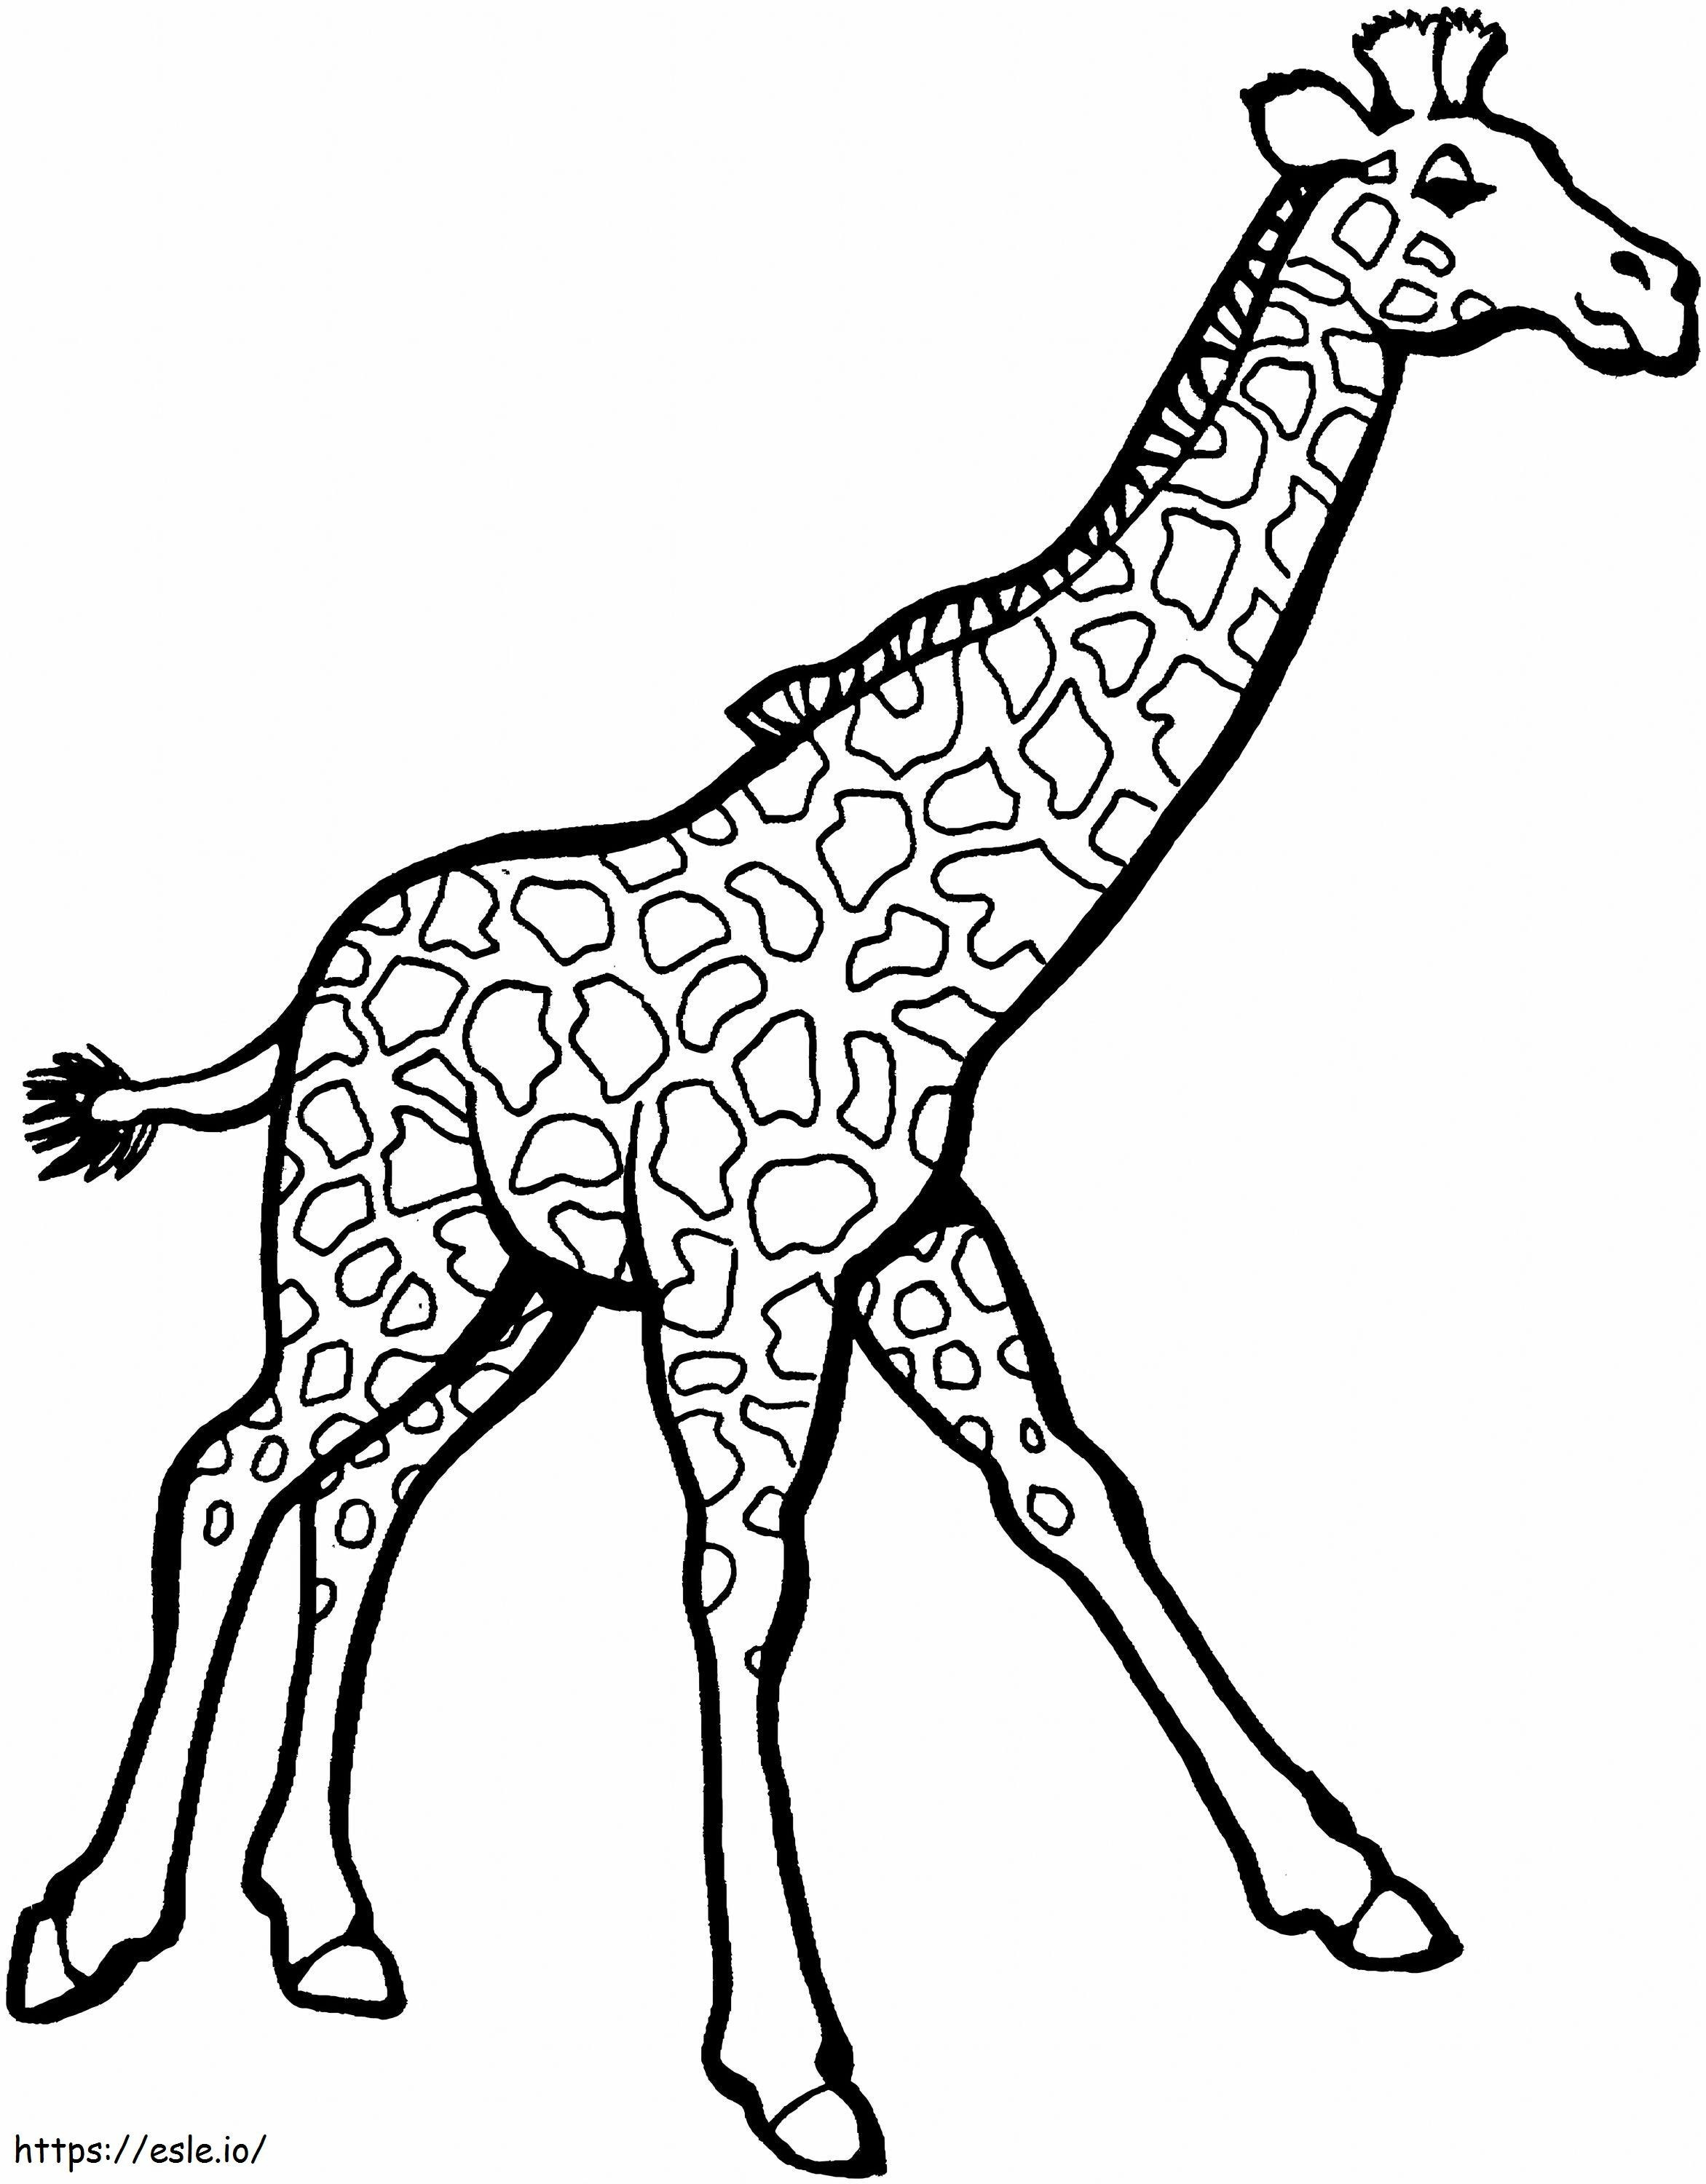 Coloriage Girafe parfaite à imprimer dessin